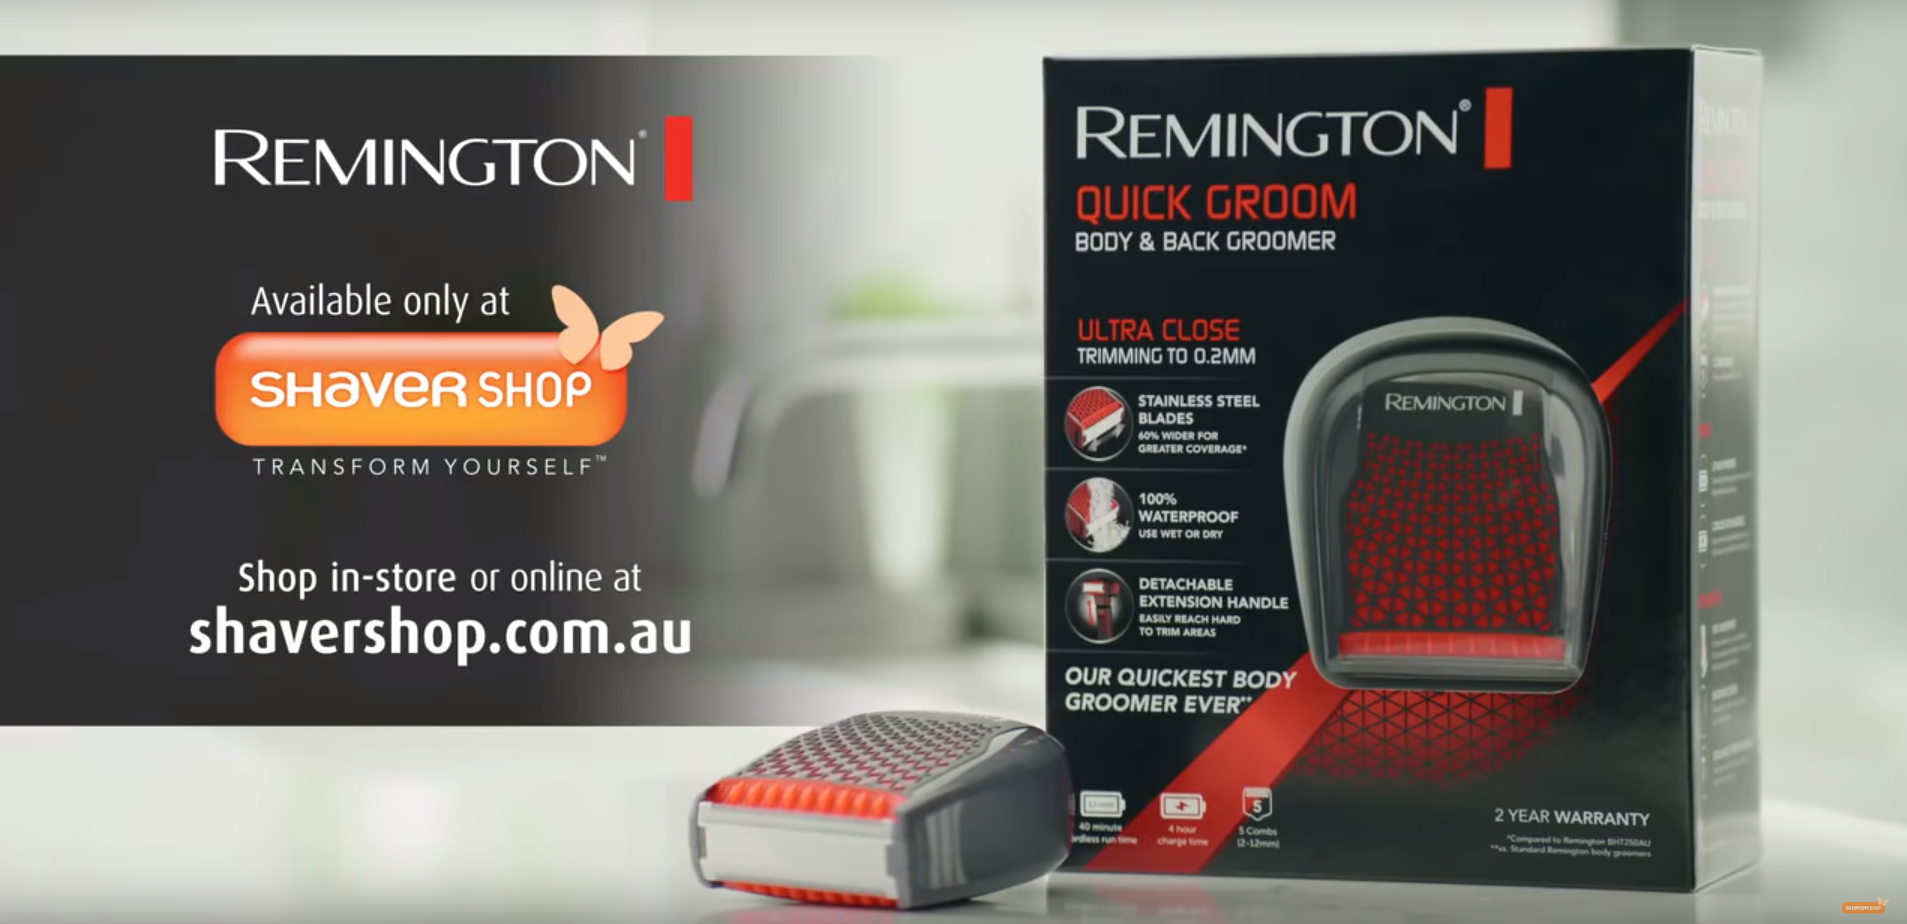 remington quick groom body groomer